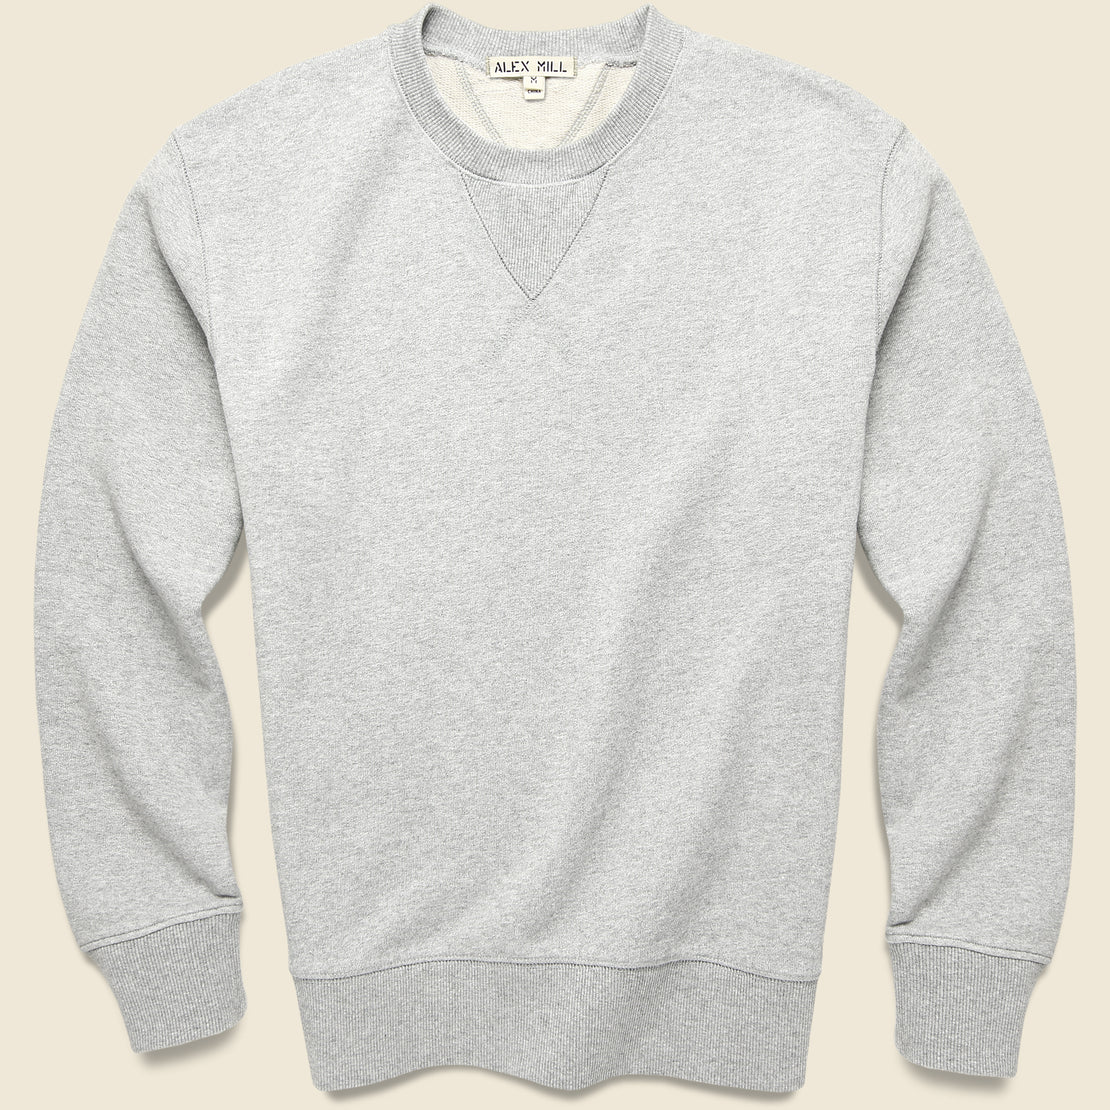 Alex Mill Garment Dyed Crewneck Sweatshirt - Heather Grey